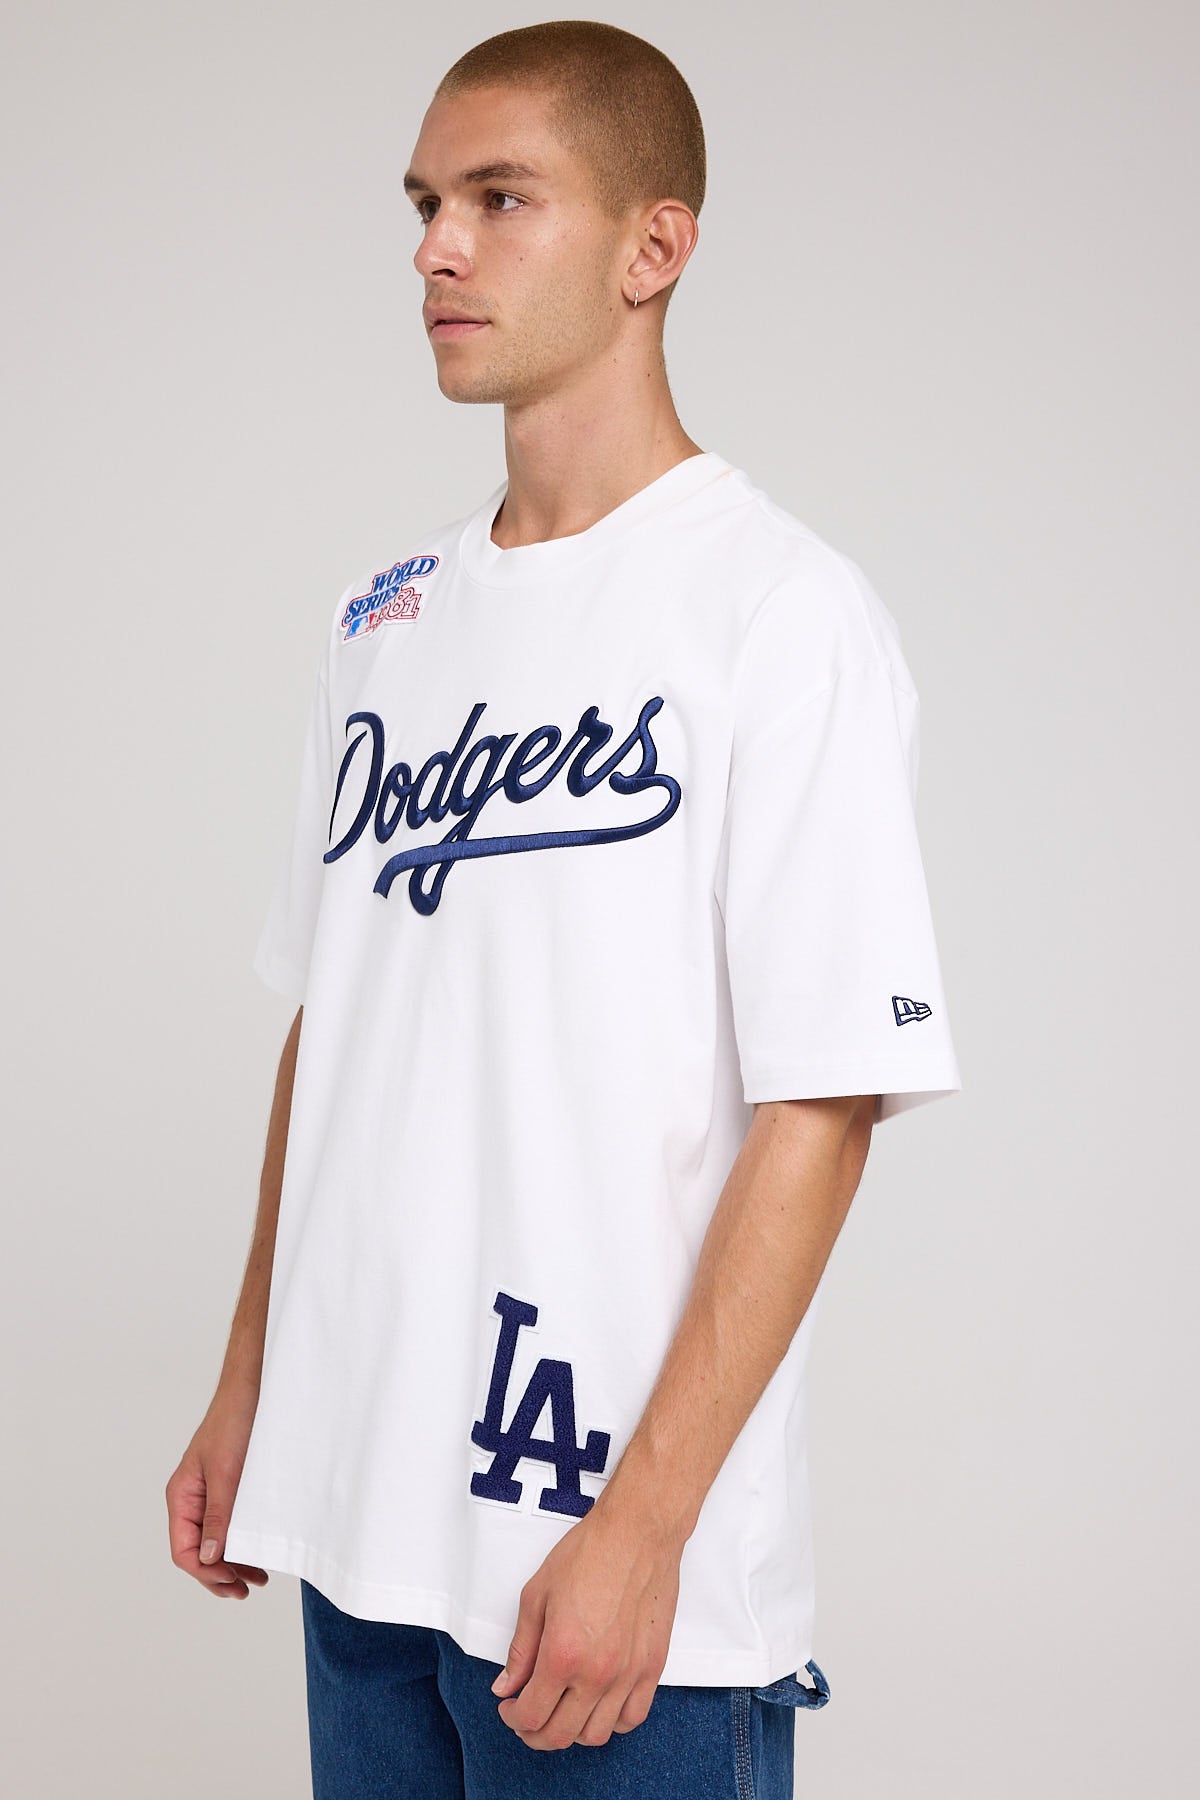 New Era Dodgers Higher Grade Oversized Tee White